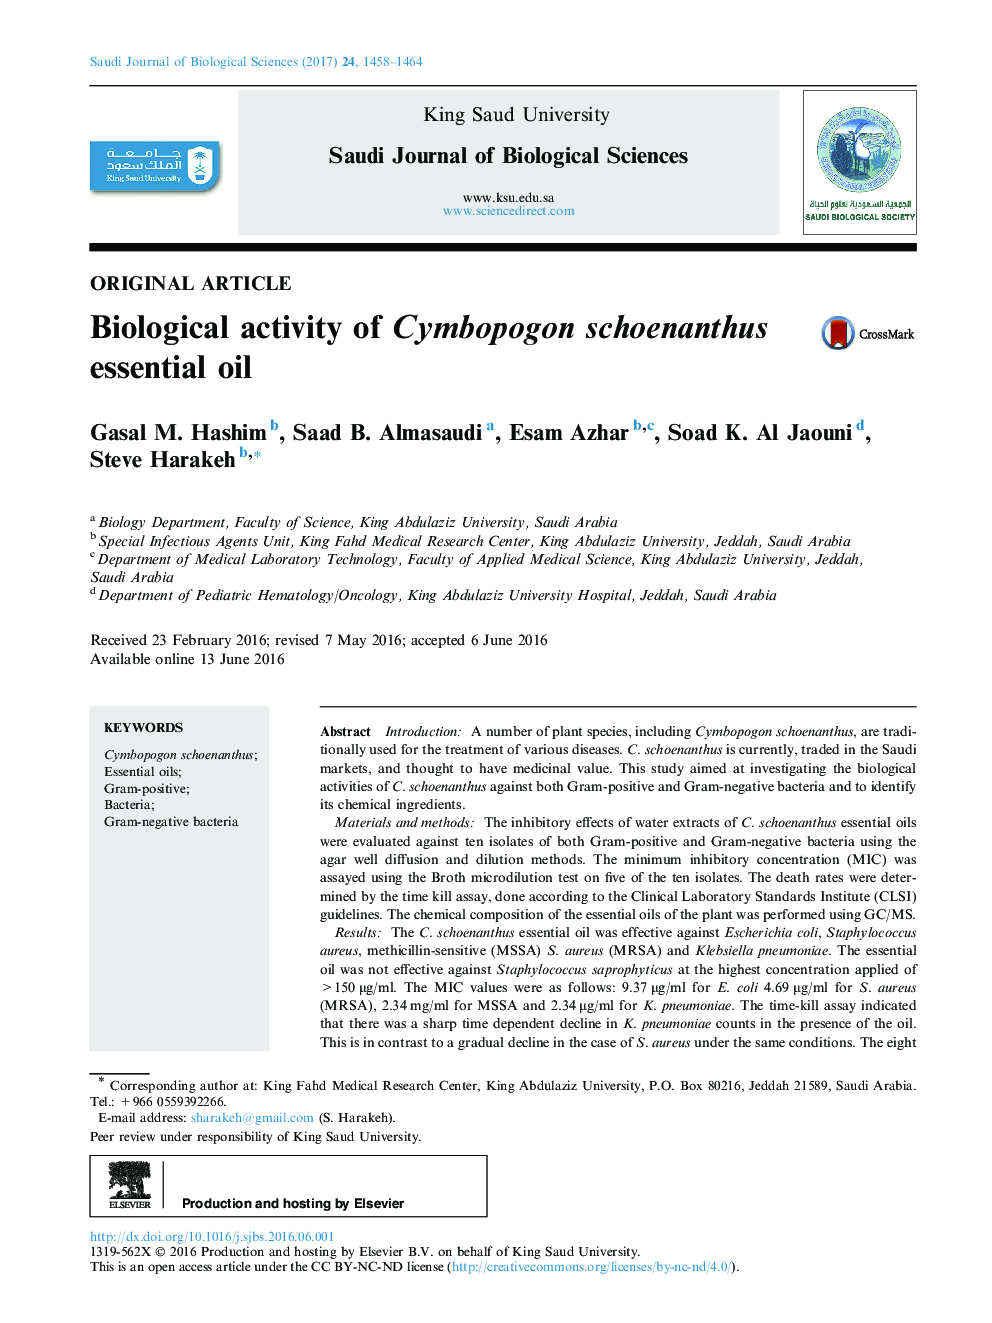 Original articleBiological activity of Cymbopogon schoenanthus essential oil